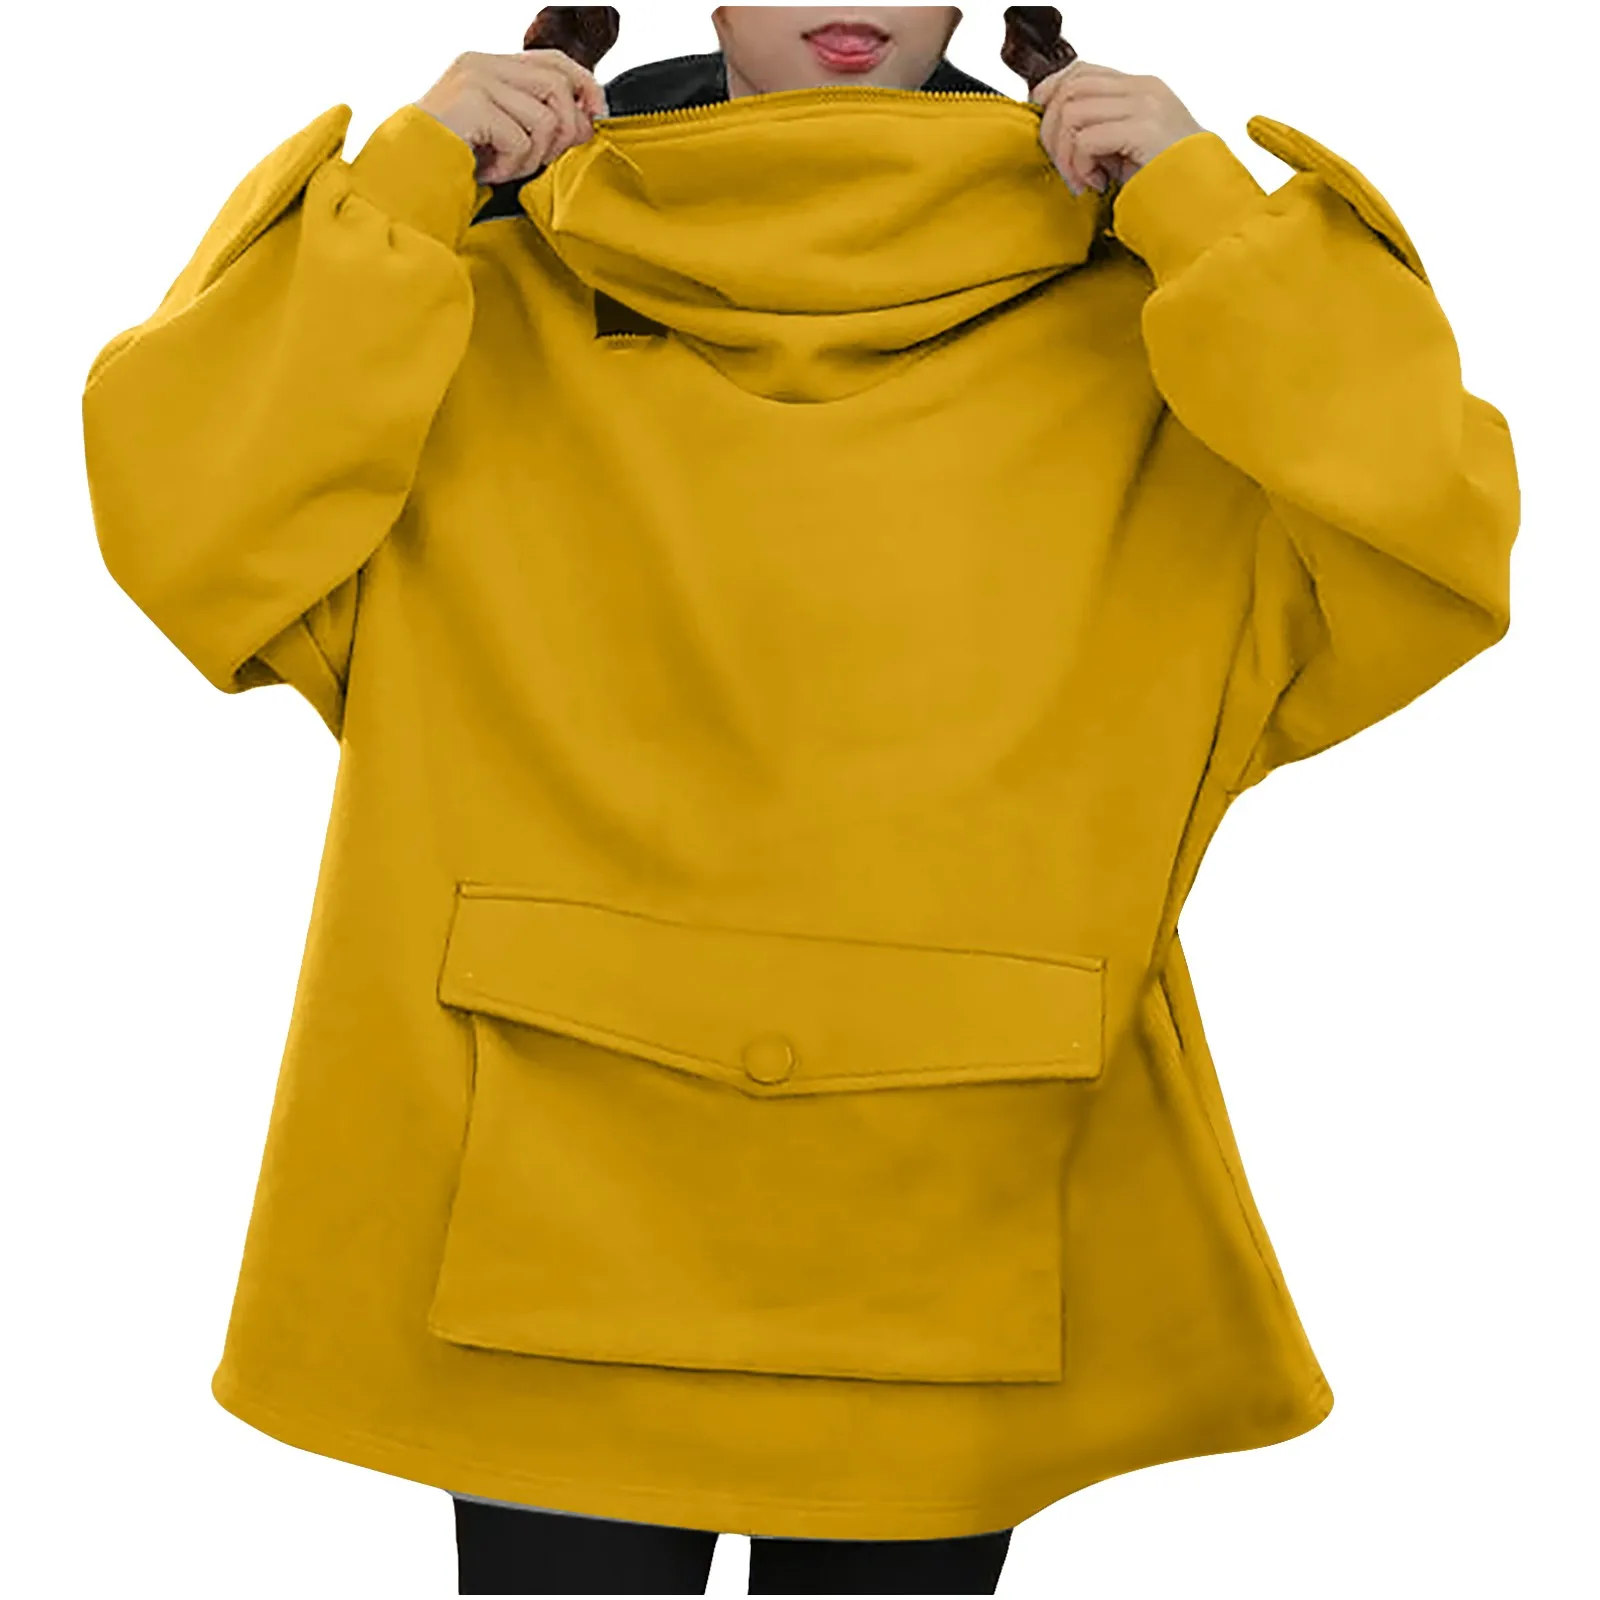 2021 Ženske Hoodies Šivanje Tri-Dimenzionalni Žep Srčkan Popolno Oblikovanje Puloverju Poliester Sweatershirt толстовка